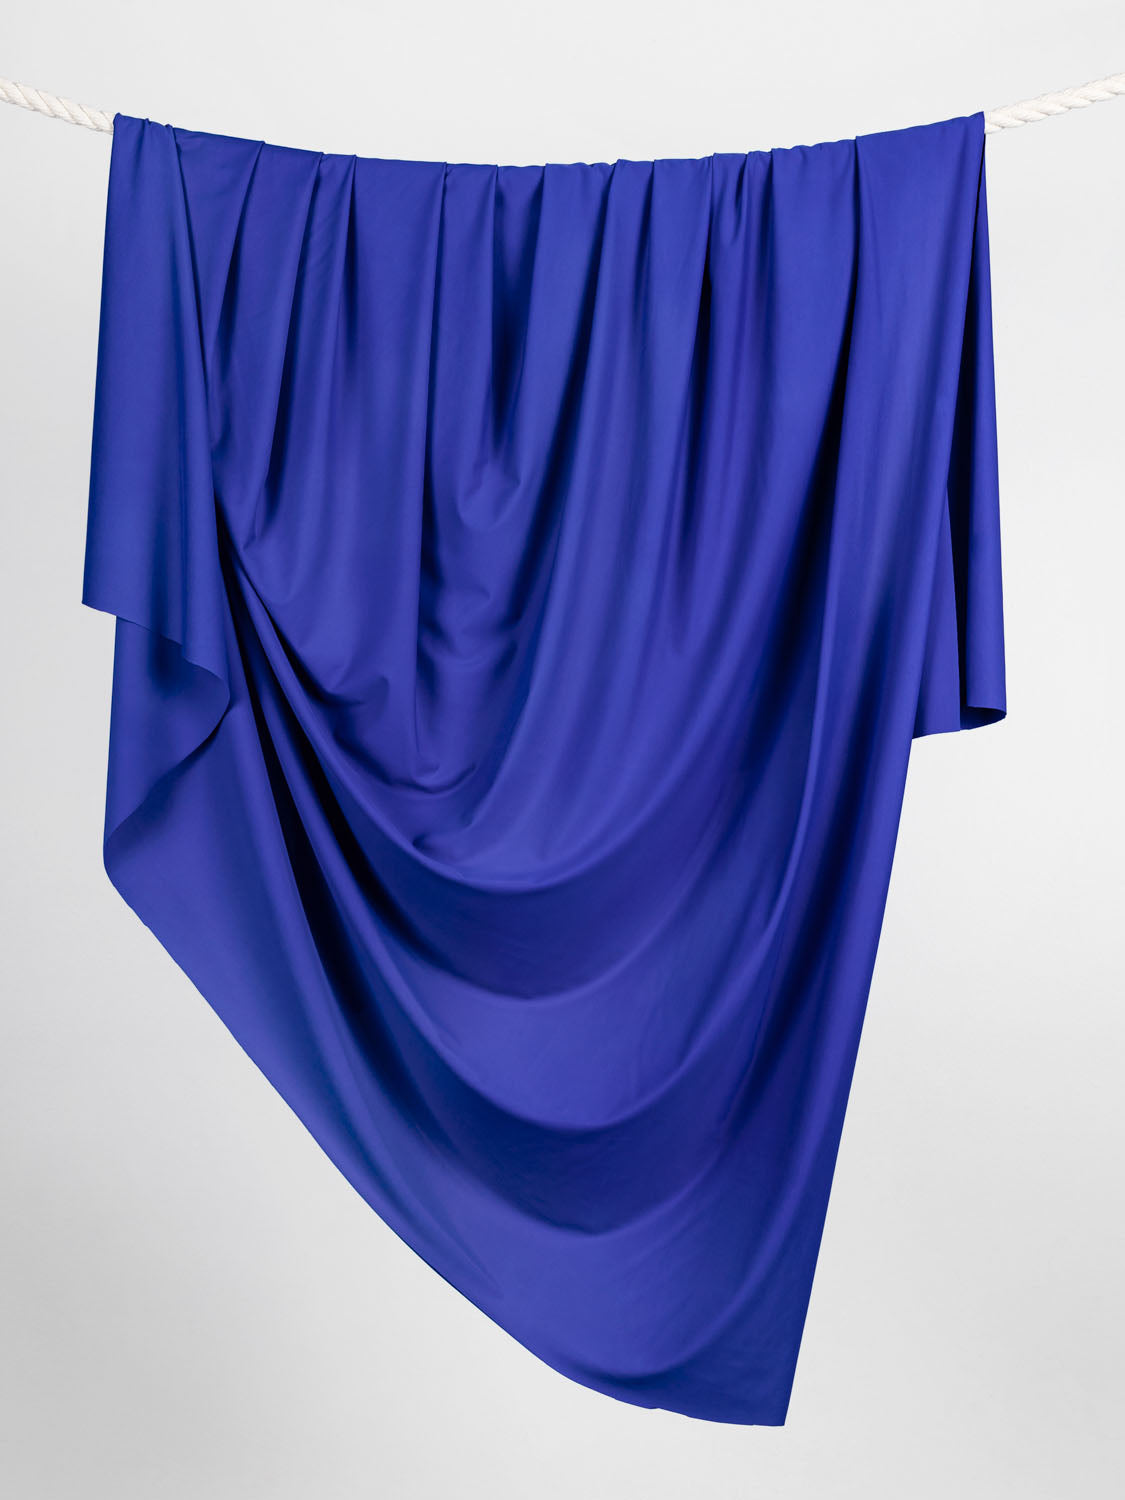 Royal Blue Nylon Spandex Swimsuit Fabric